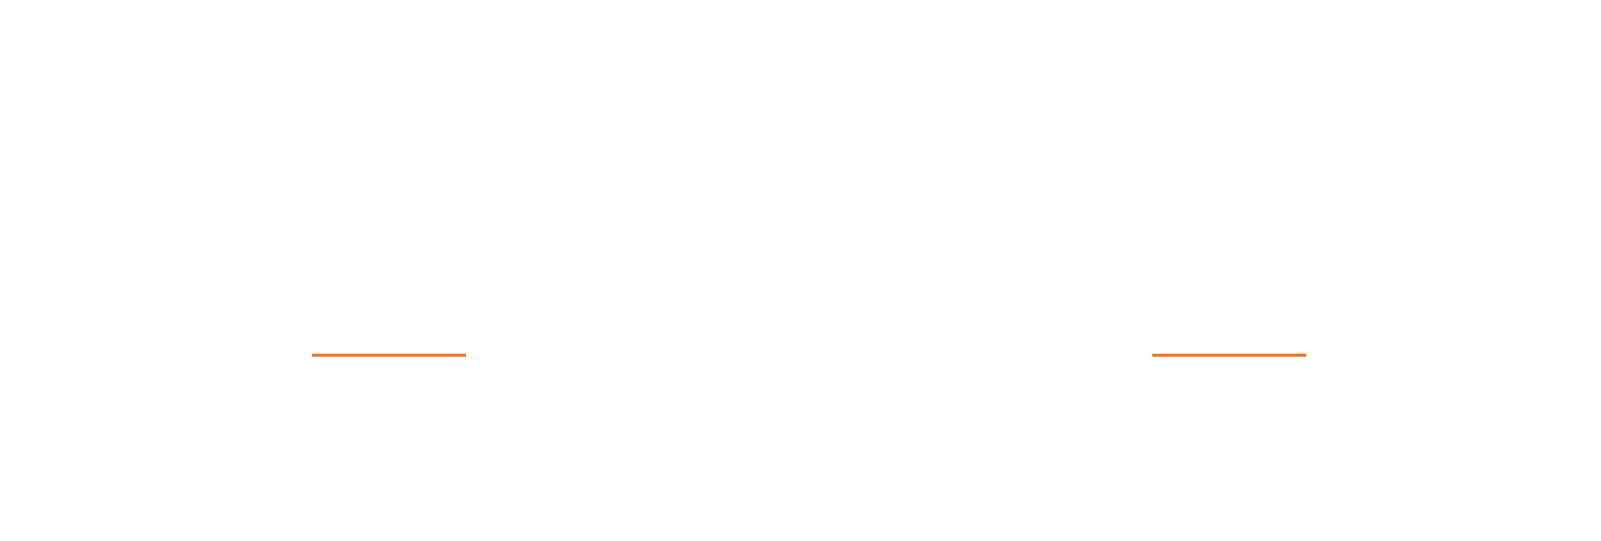 Renovation capital - white logo